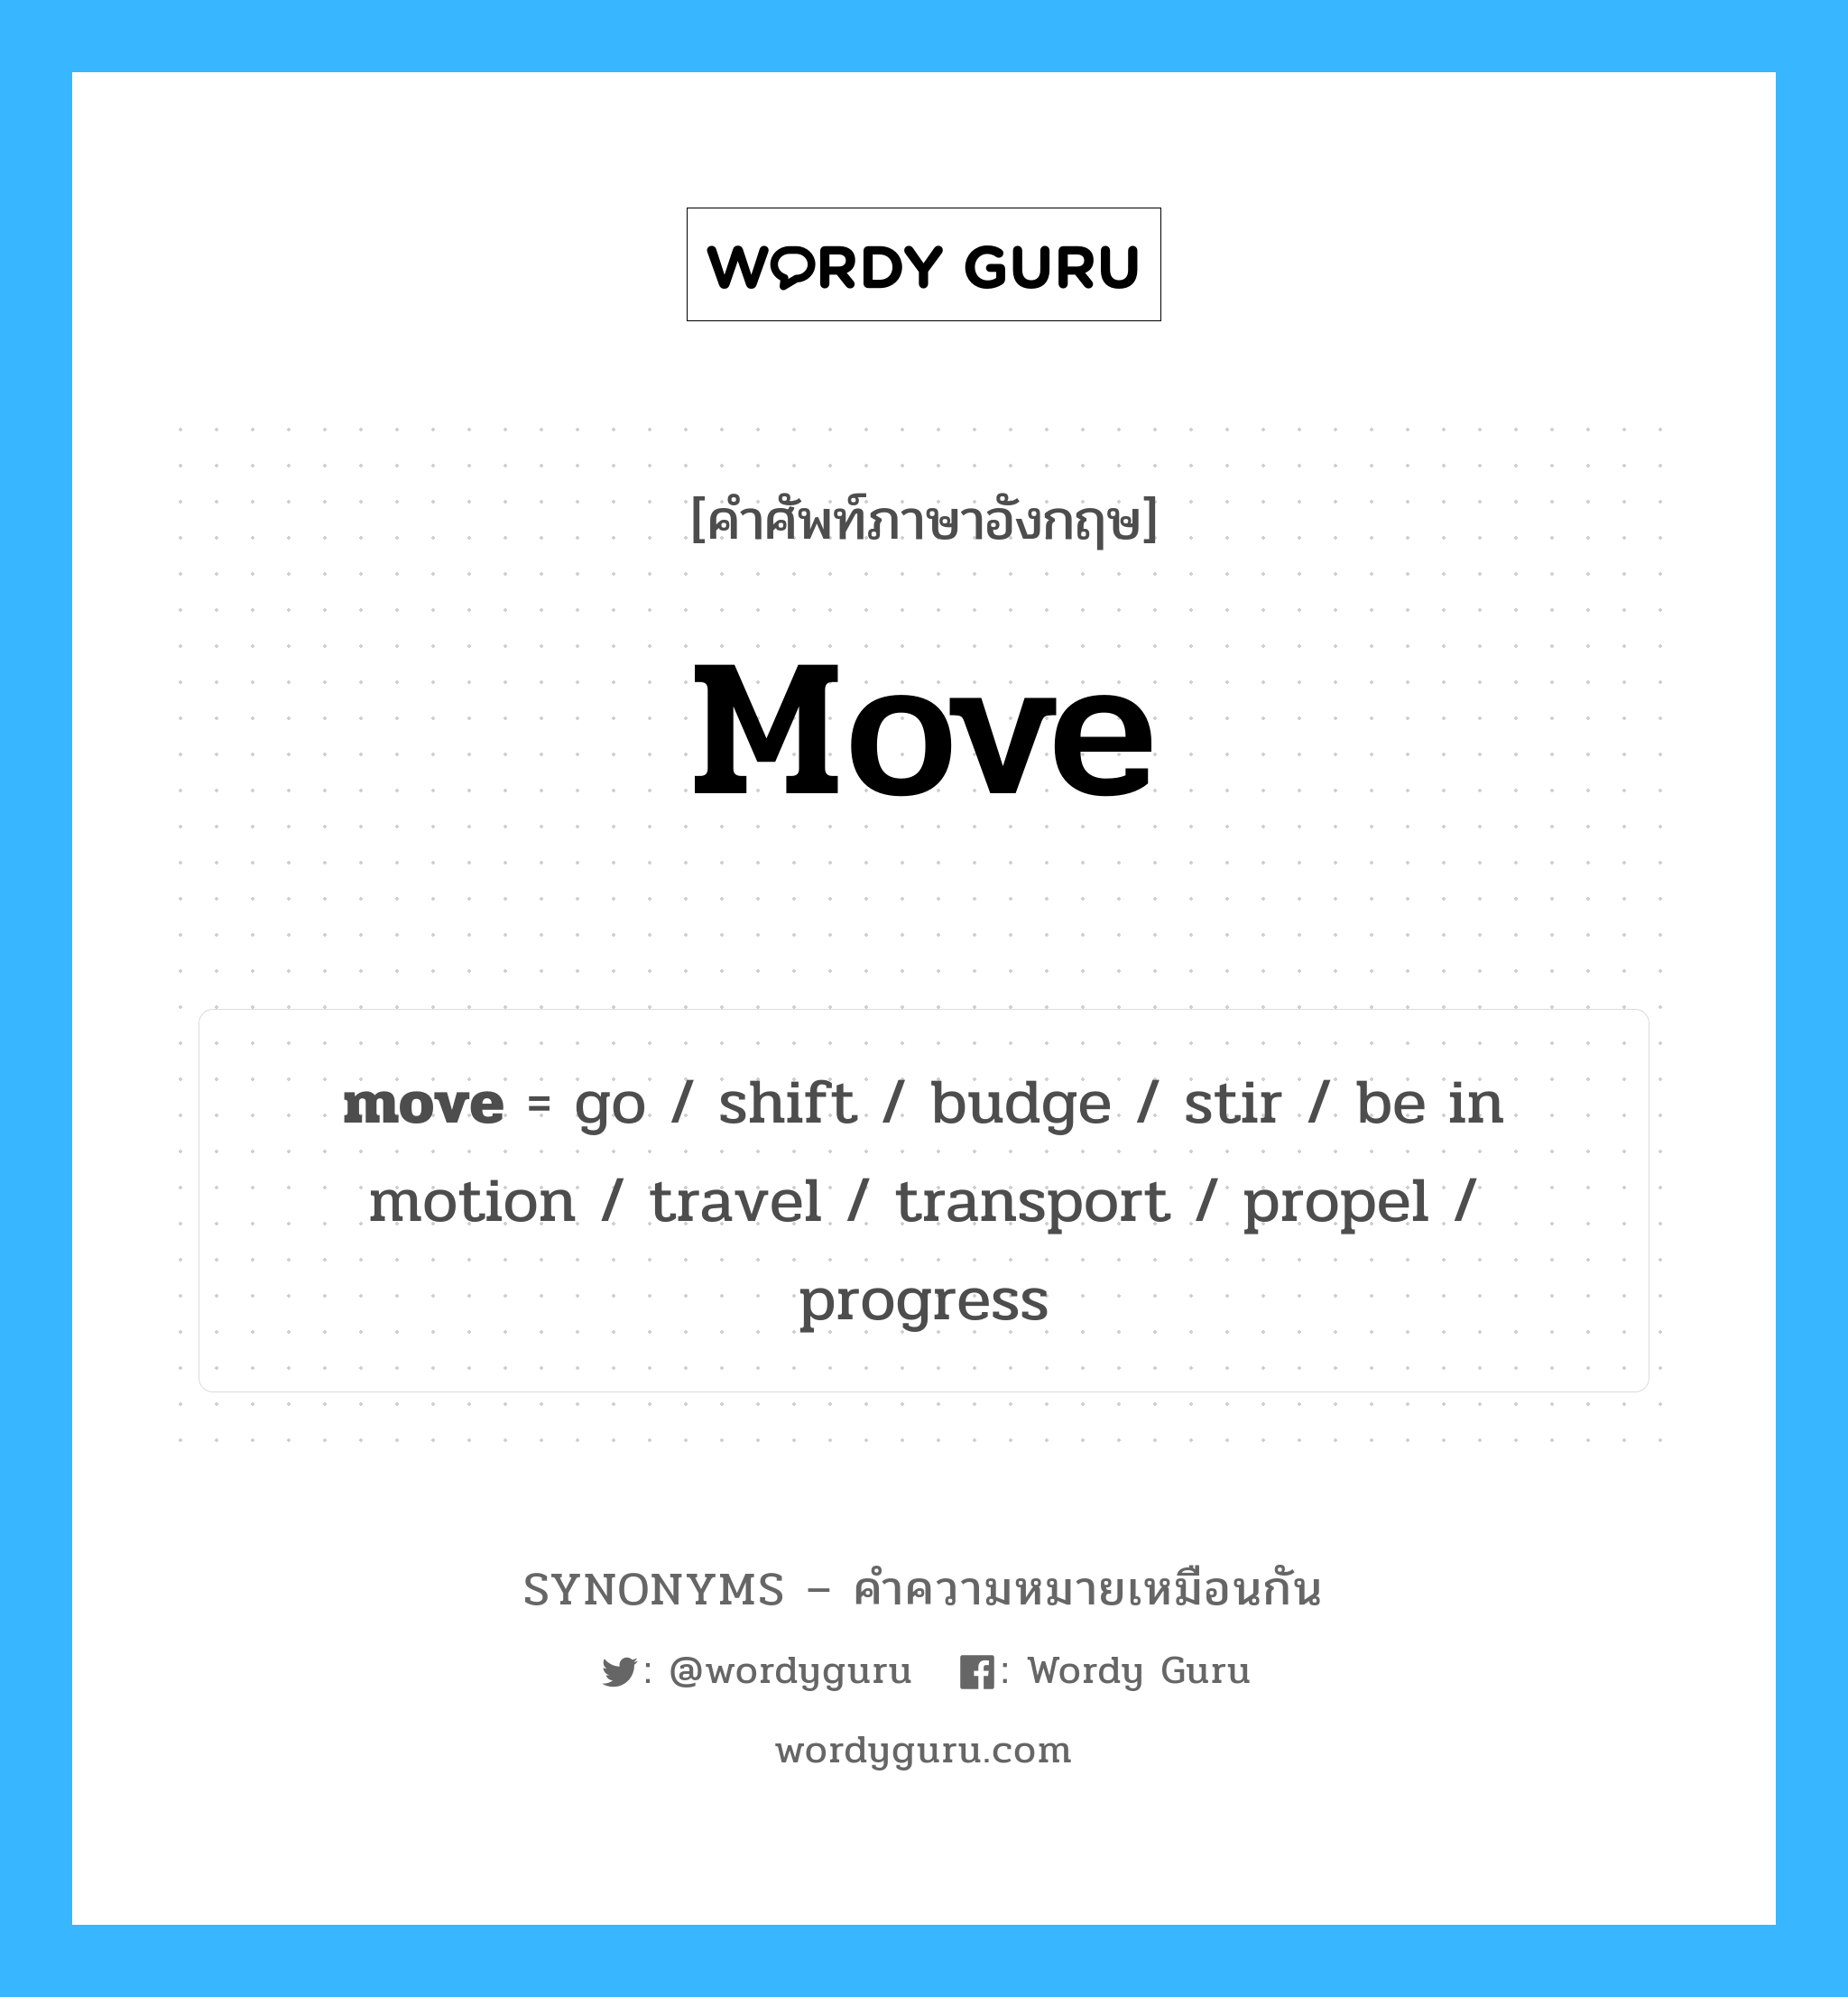 be in motion เป็นหนึ่งใน move และมีคำอื่น ๆ อีกดังนี้, คำศัพท์ภาษาอังกฤษ be in motion ความหมายคล้ายกันกับ move แปลว่า สามารถในการเคลื่อนไหว หมวด move